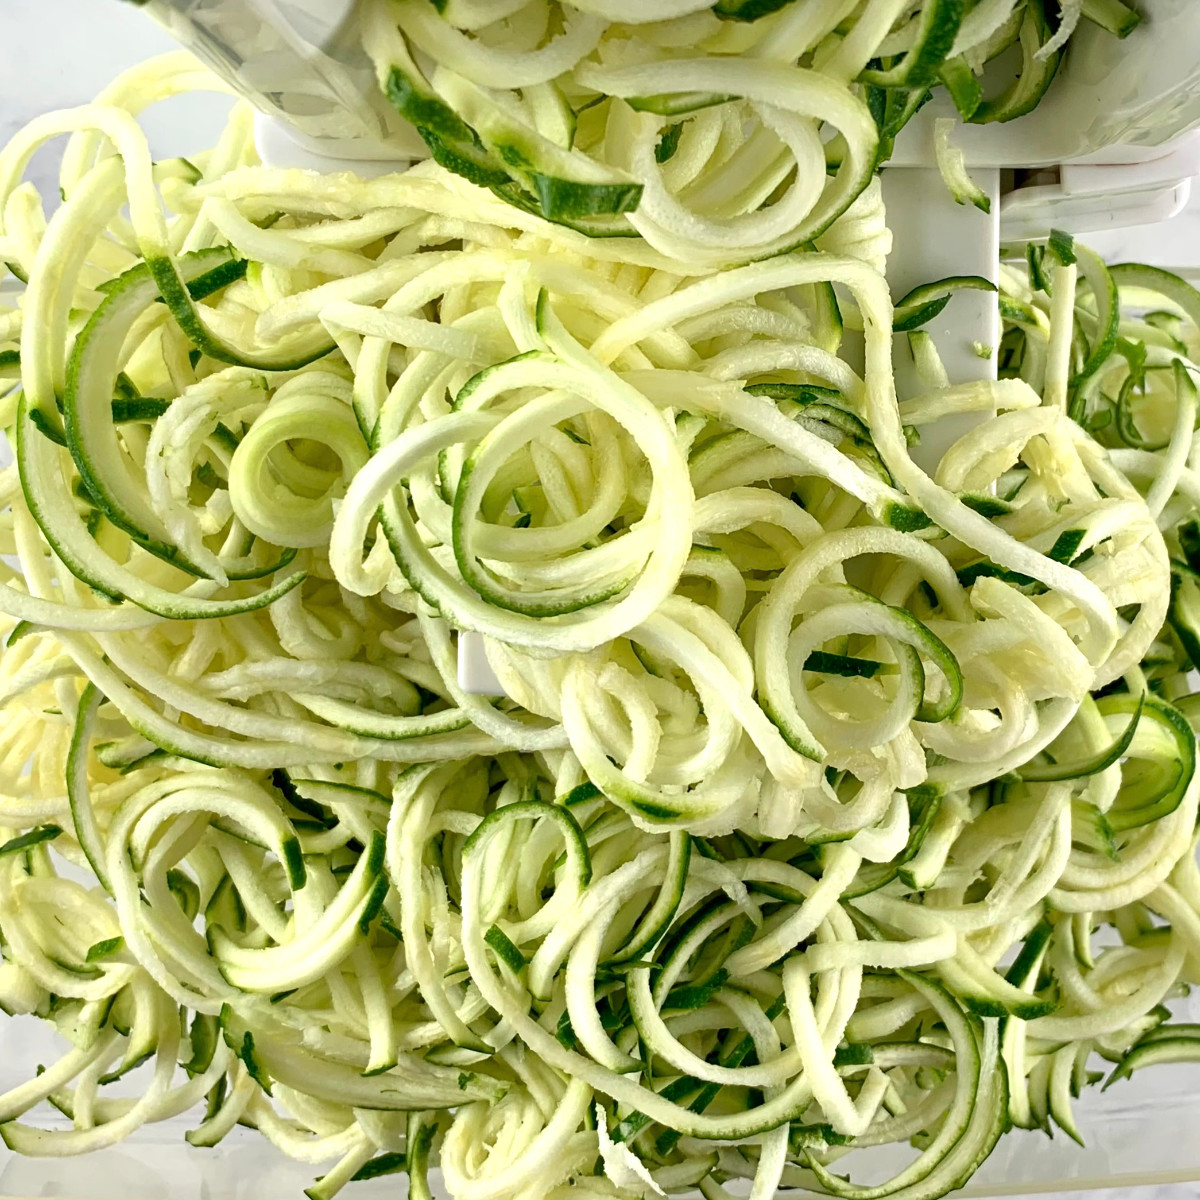 A close-up of zucchini noodles - zoodles.